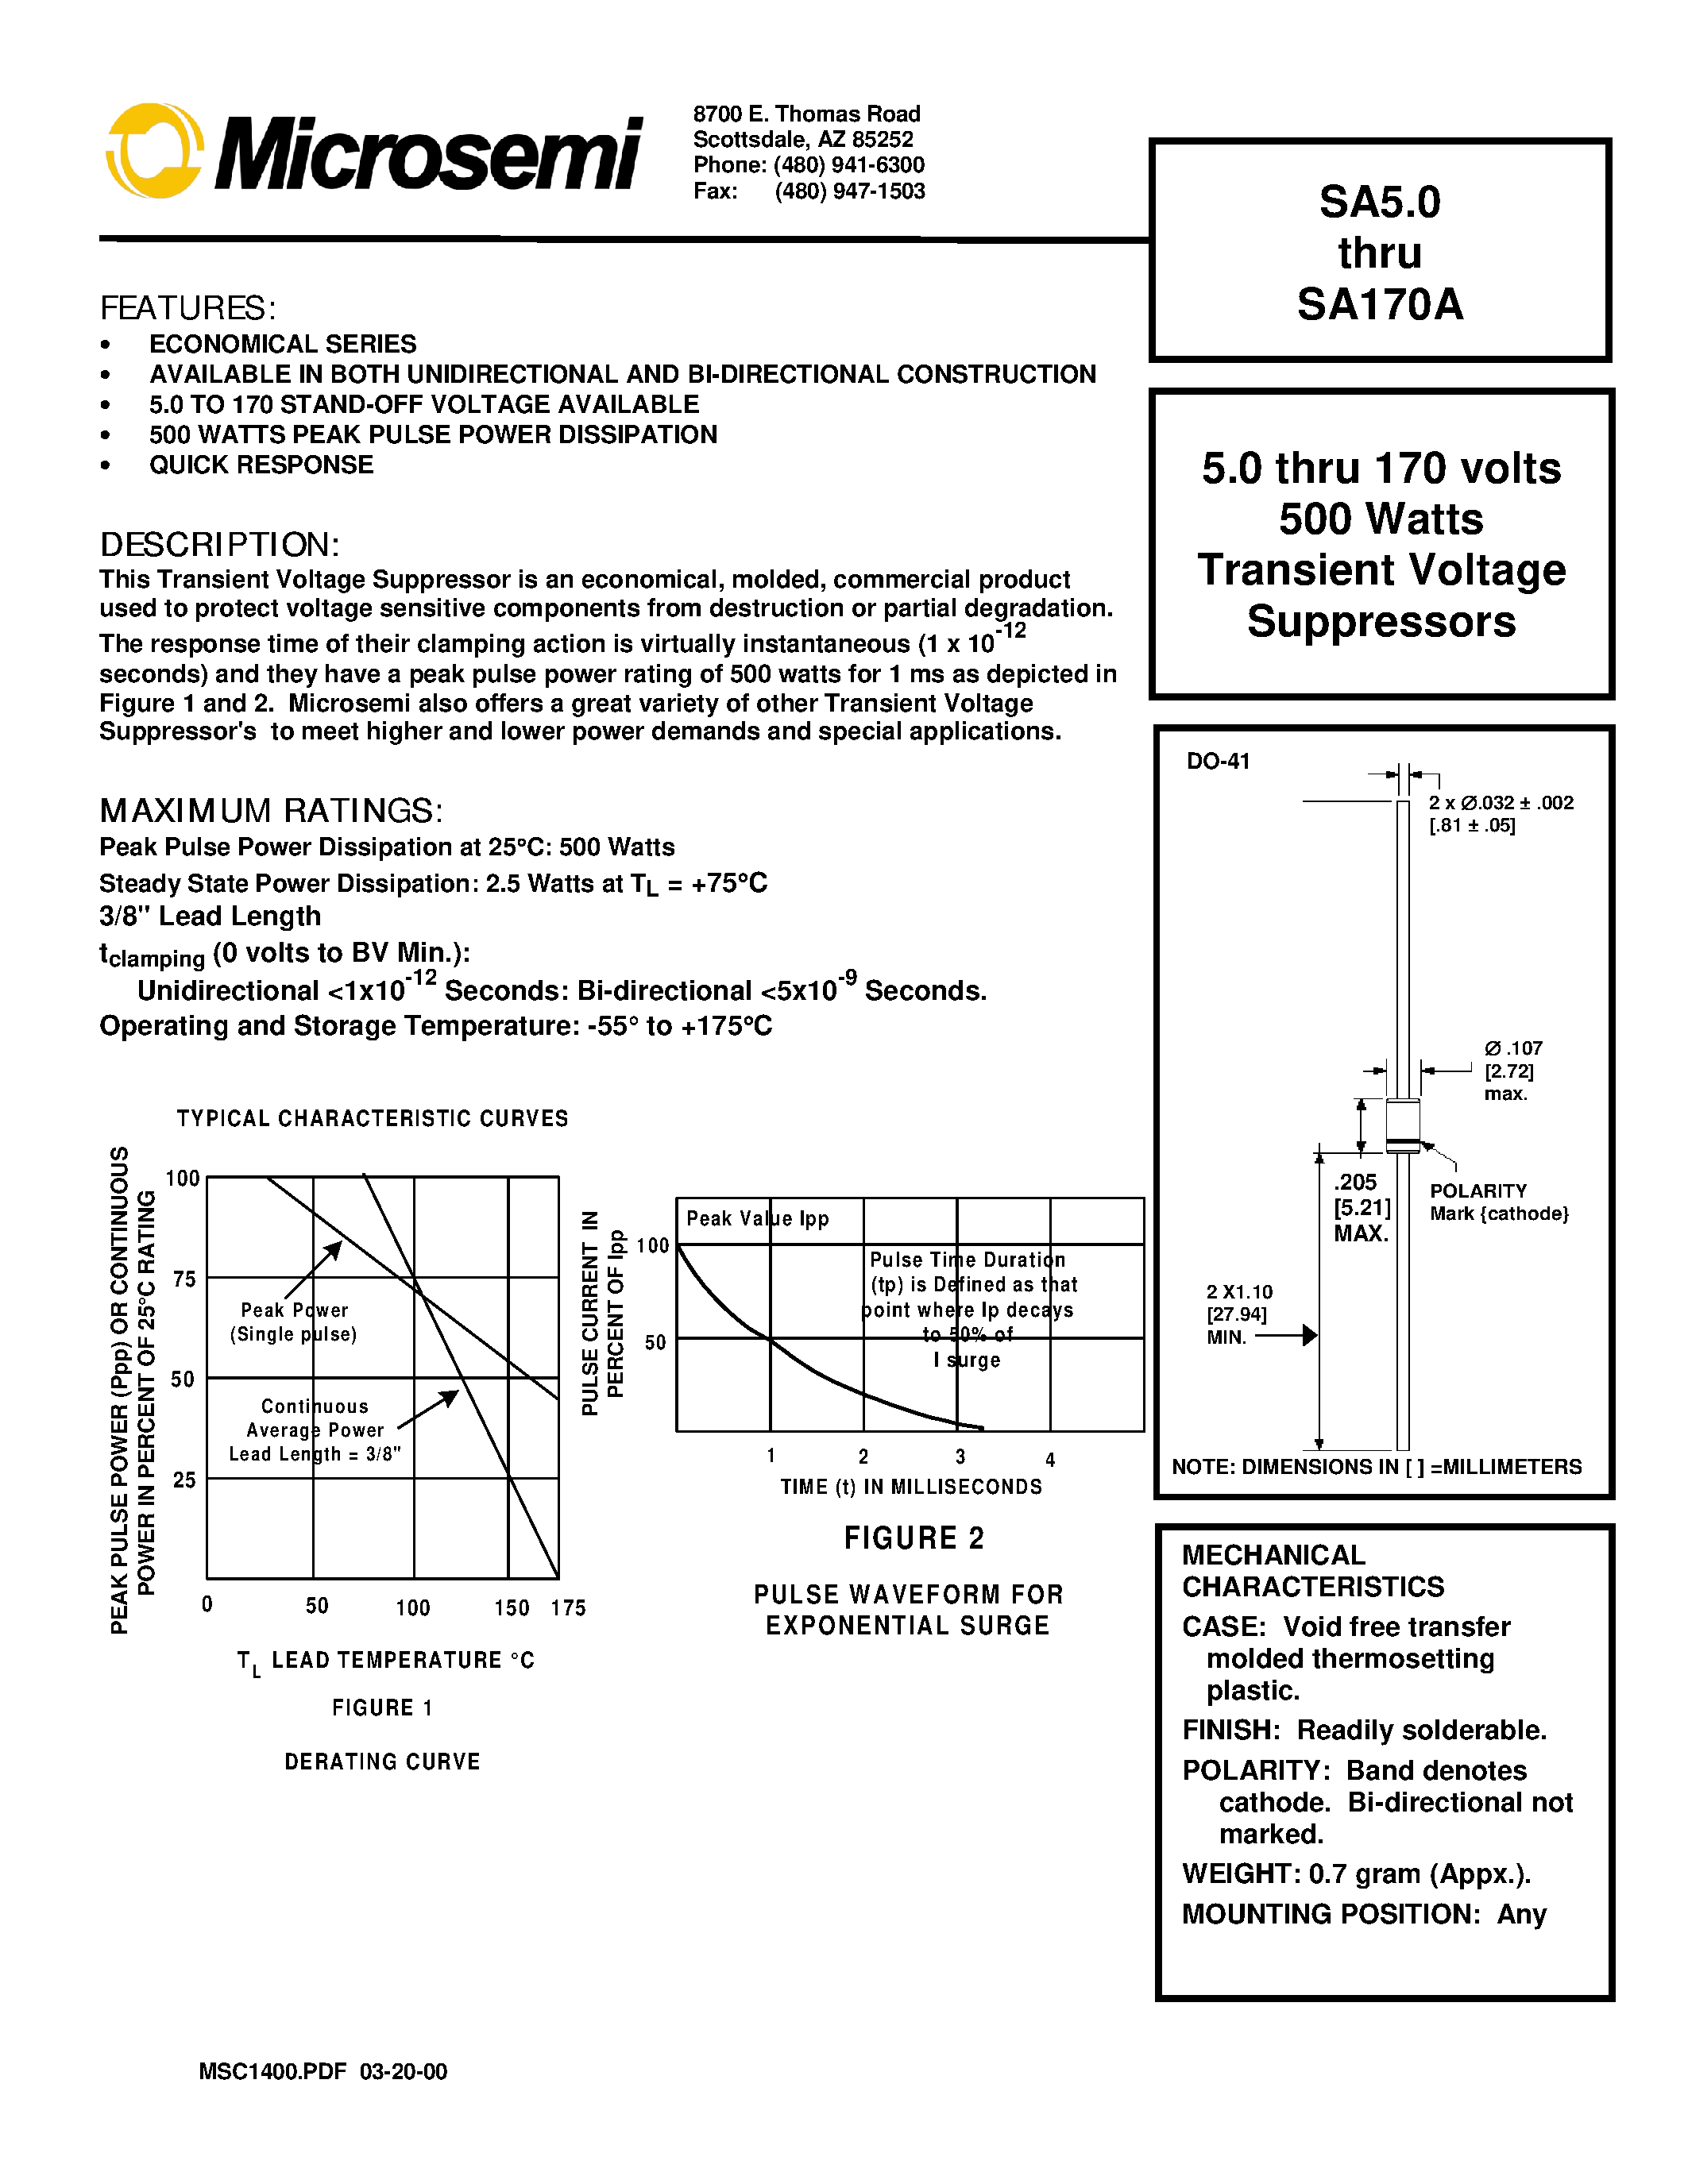 Datasheet SA26A - 5.0 thru 170 volts 500 Watts Transient Voltage Suppressors page 1